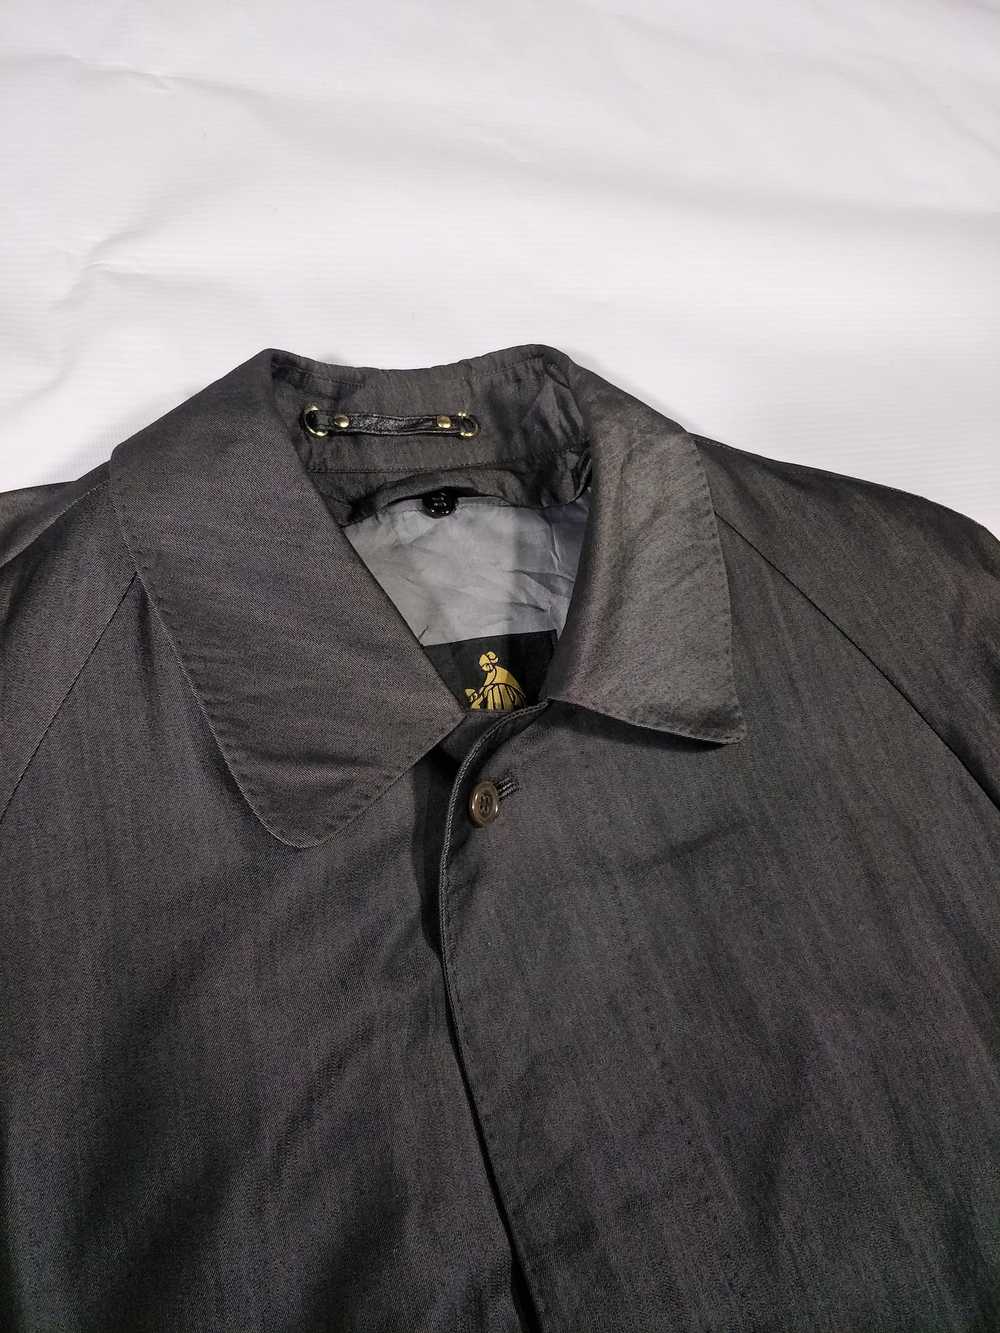 Lanvin Lanvin Full Length Coat Dark Gray Vintage - image 5